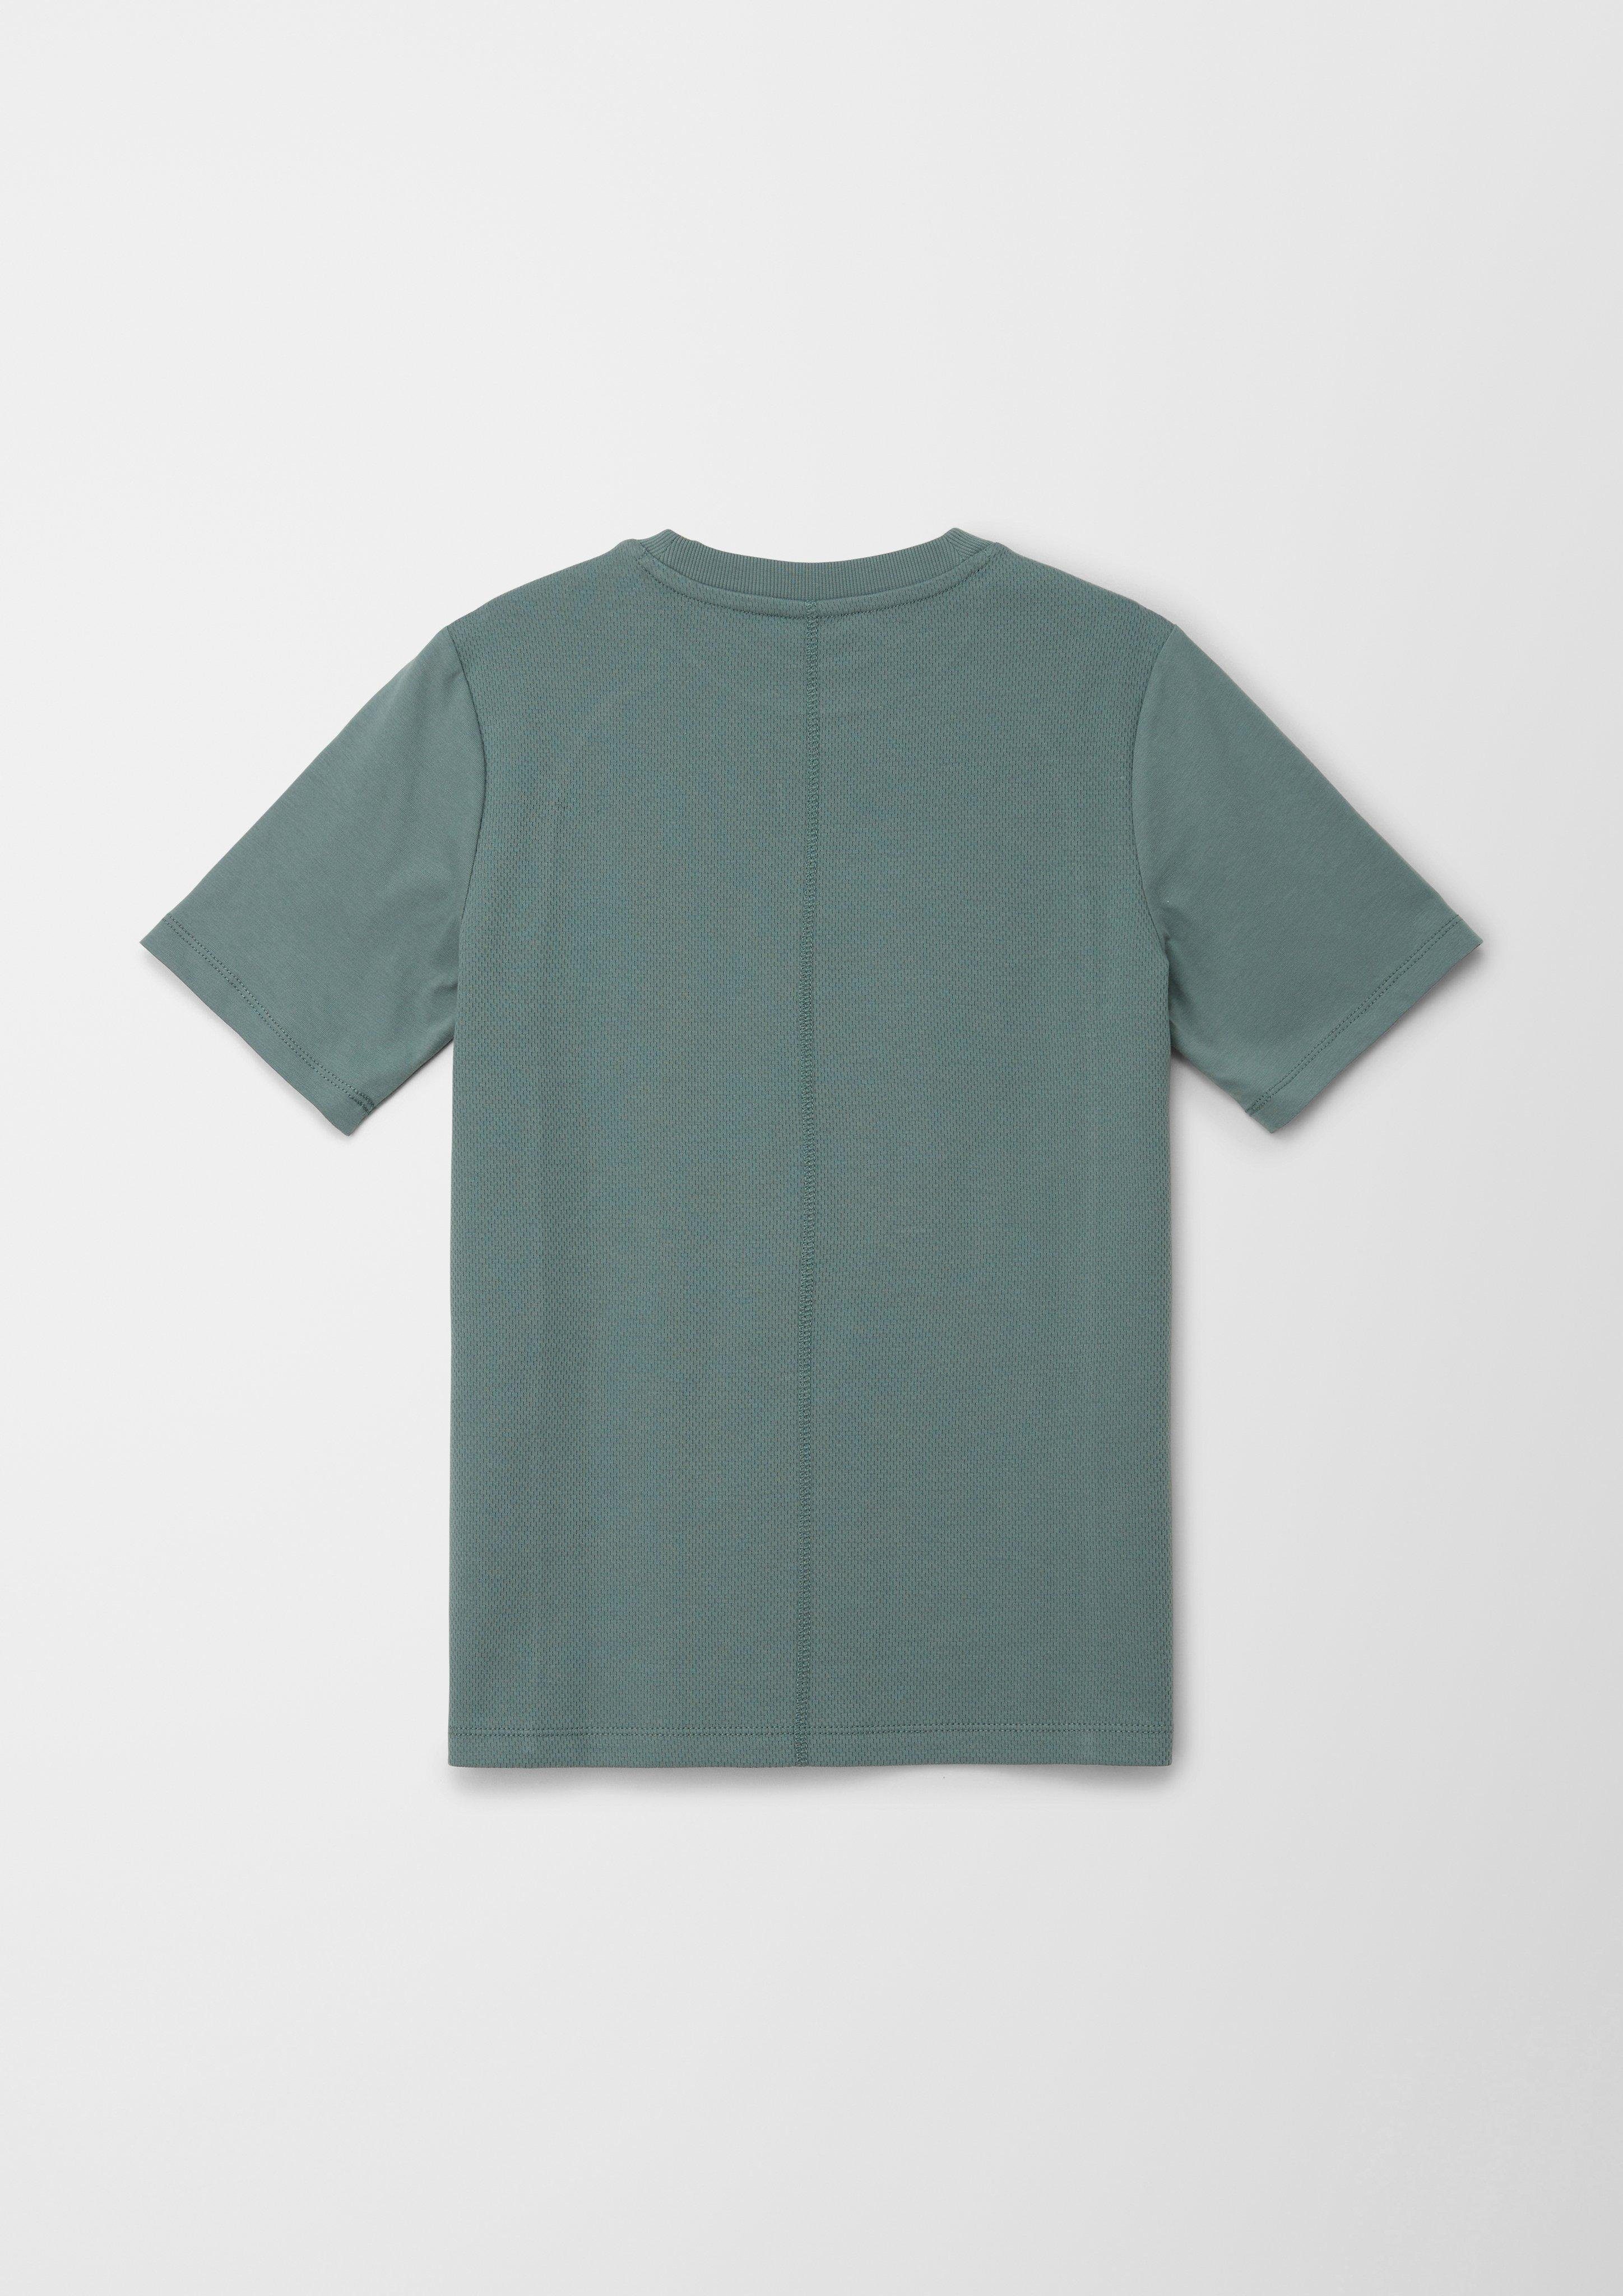 Fabricmix petrol T-Shirt s.Oliver im Ziernaht Kurzarmshirt